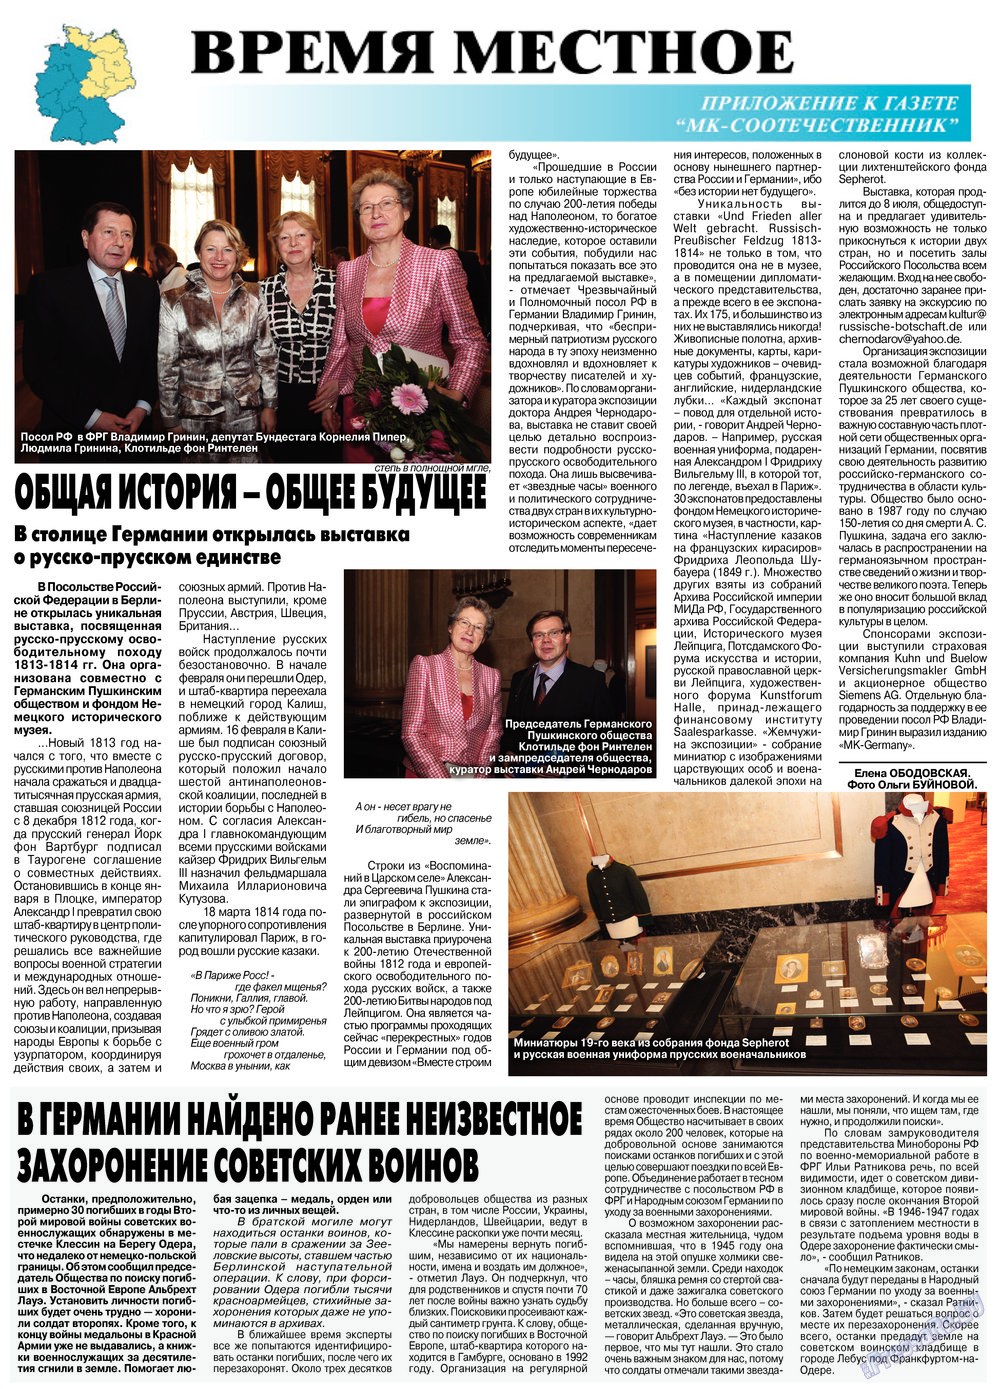 МК-Германия планета мнений, газета. 2013 №5 стр.25